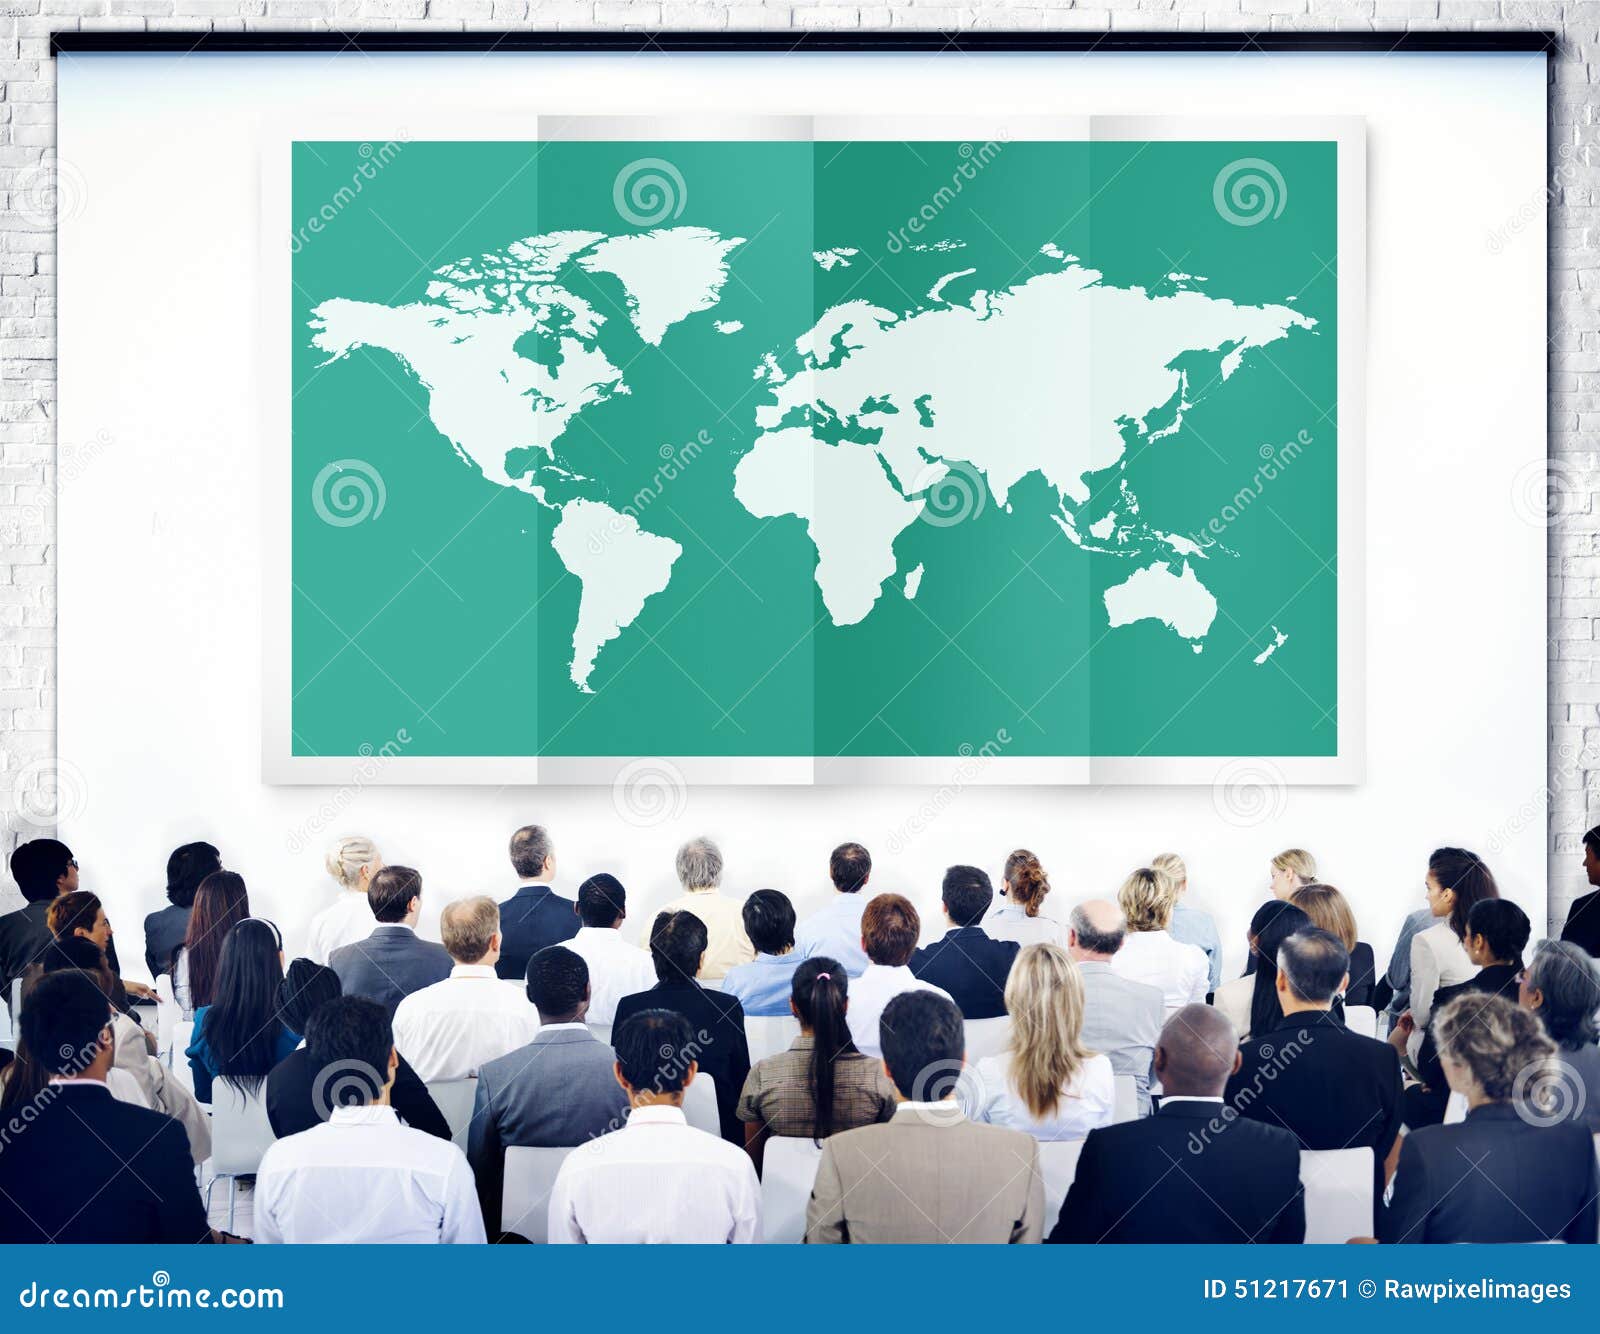 world global business cartography globalization international co